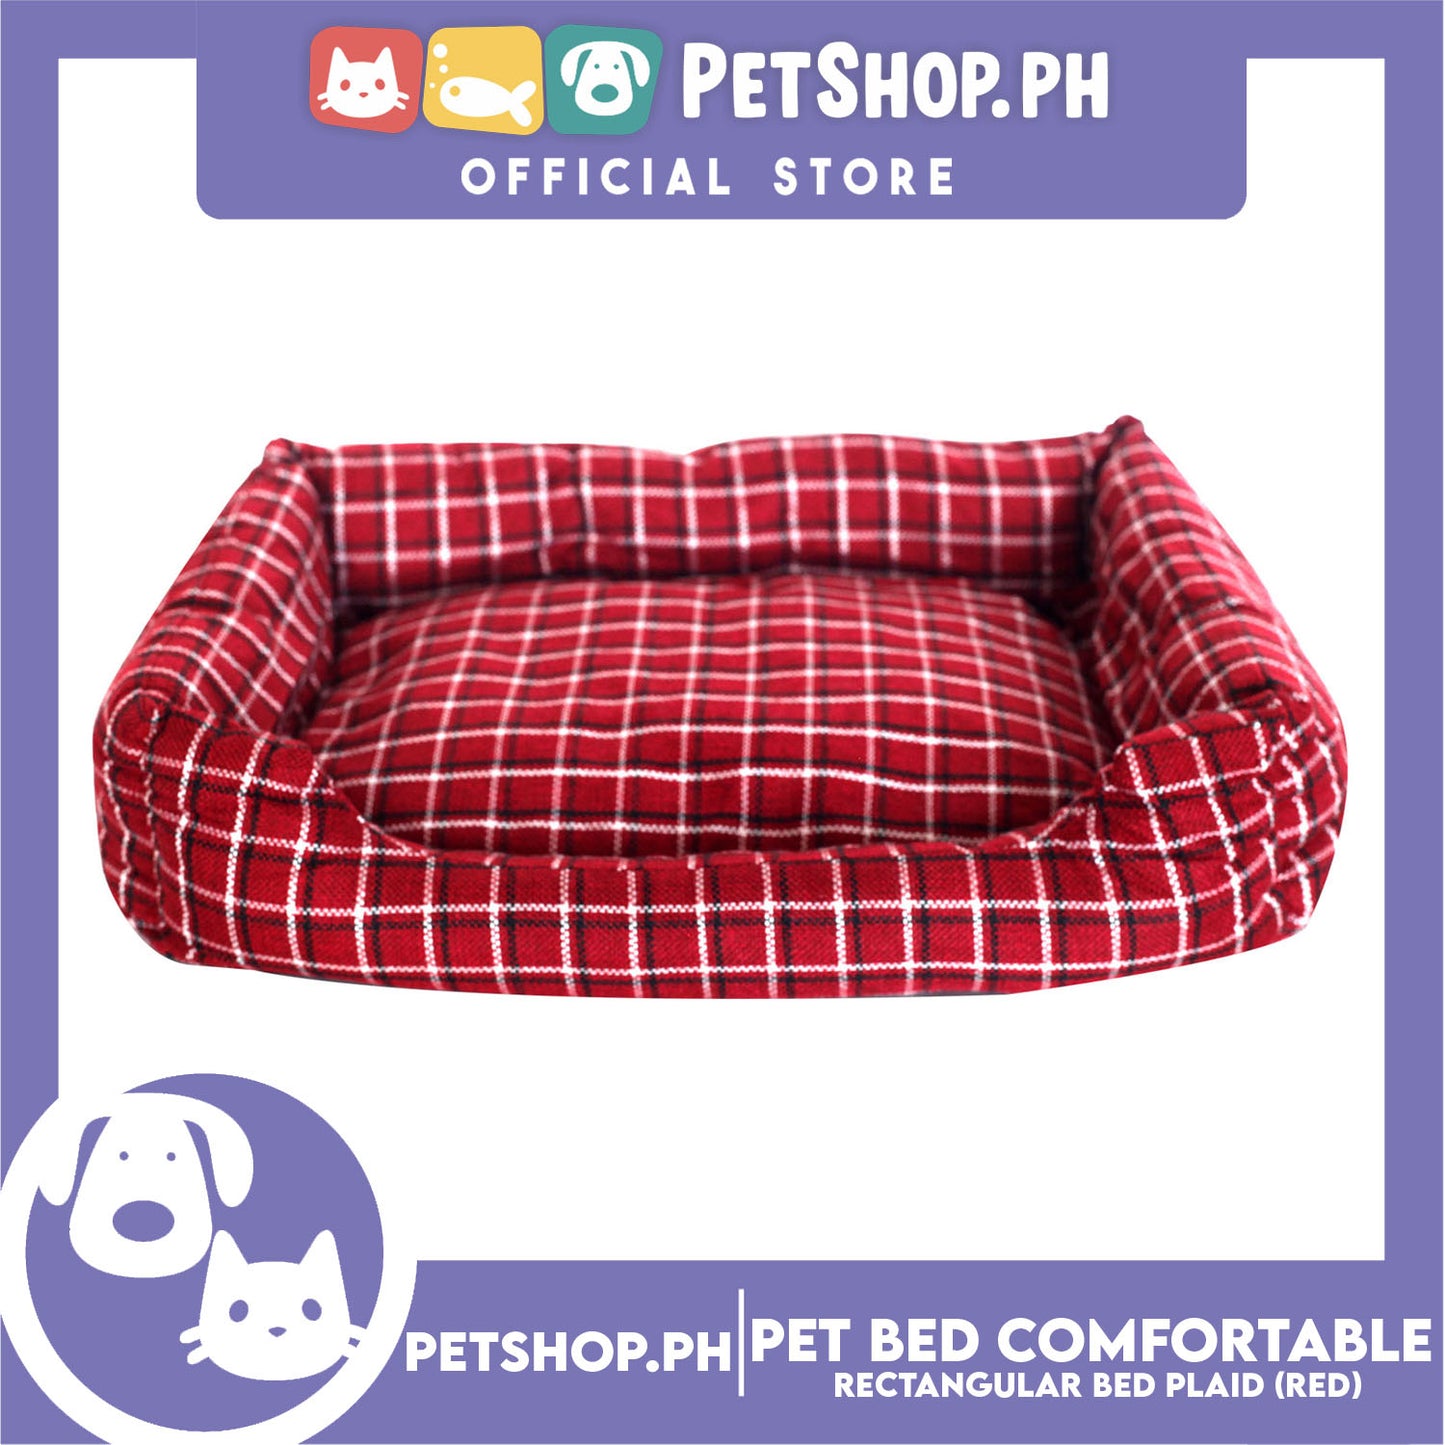 Pet Bed Comfortable Rectangular Pet Bed Plaid Design 50x41x10cm Medium for Dogs & Cats (Red)